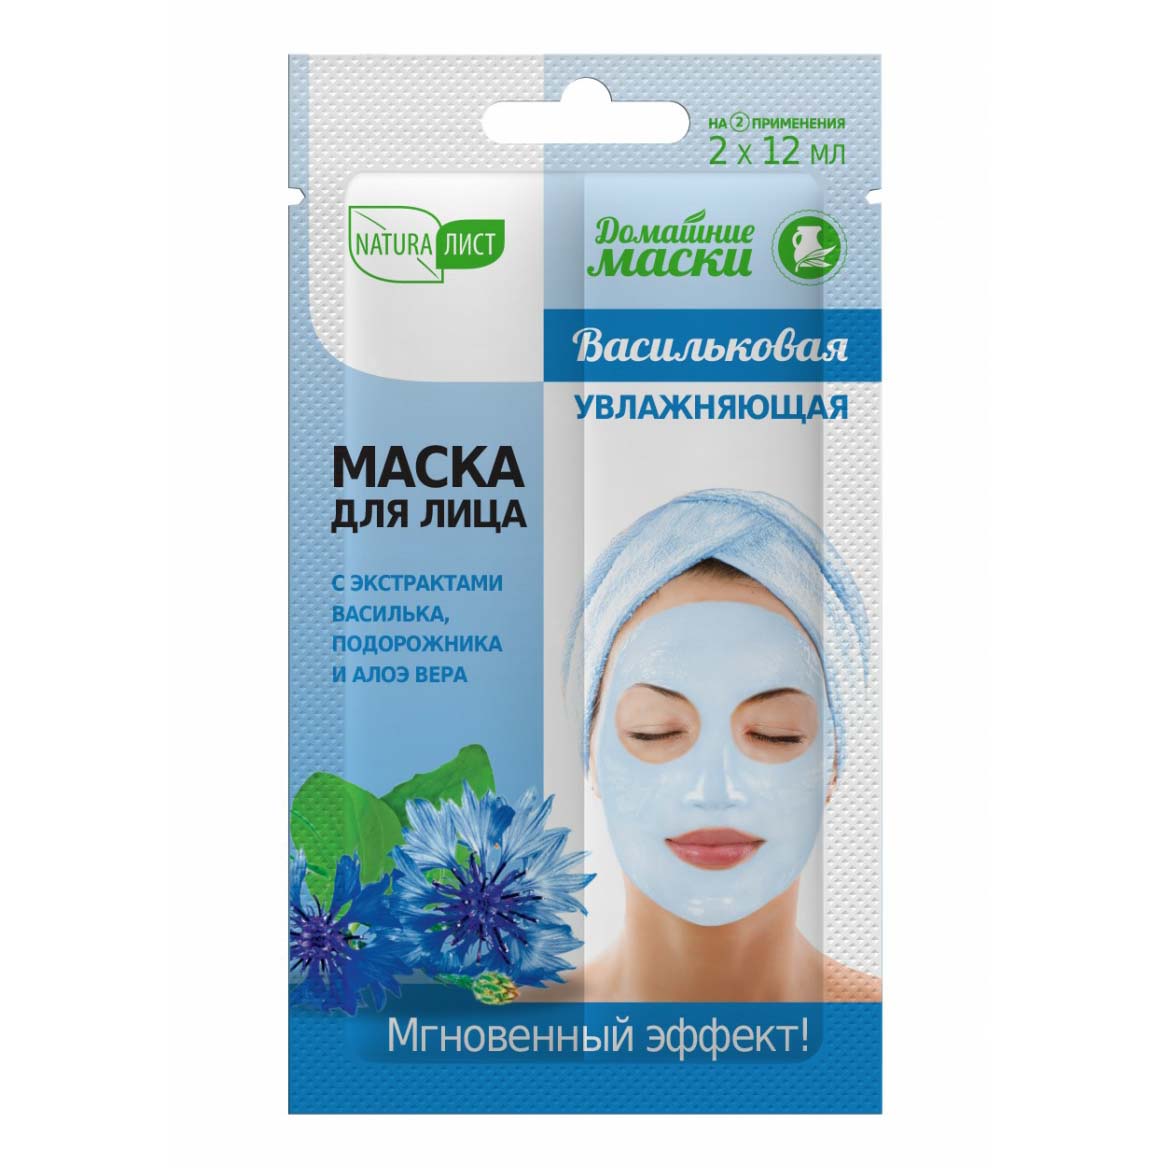 Кремовая маска для лица АртКолор Naturalist васильковая увлажняющая 12 мл х 2 шт